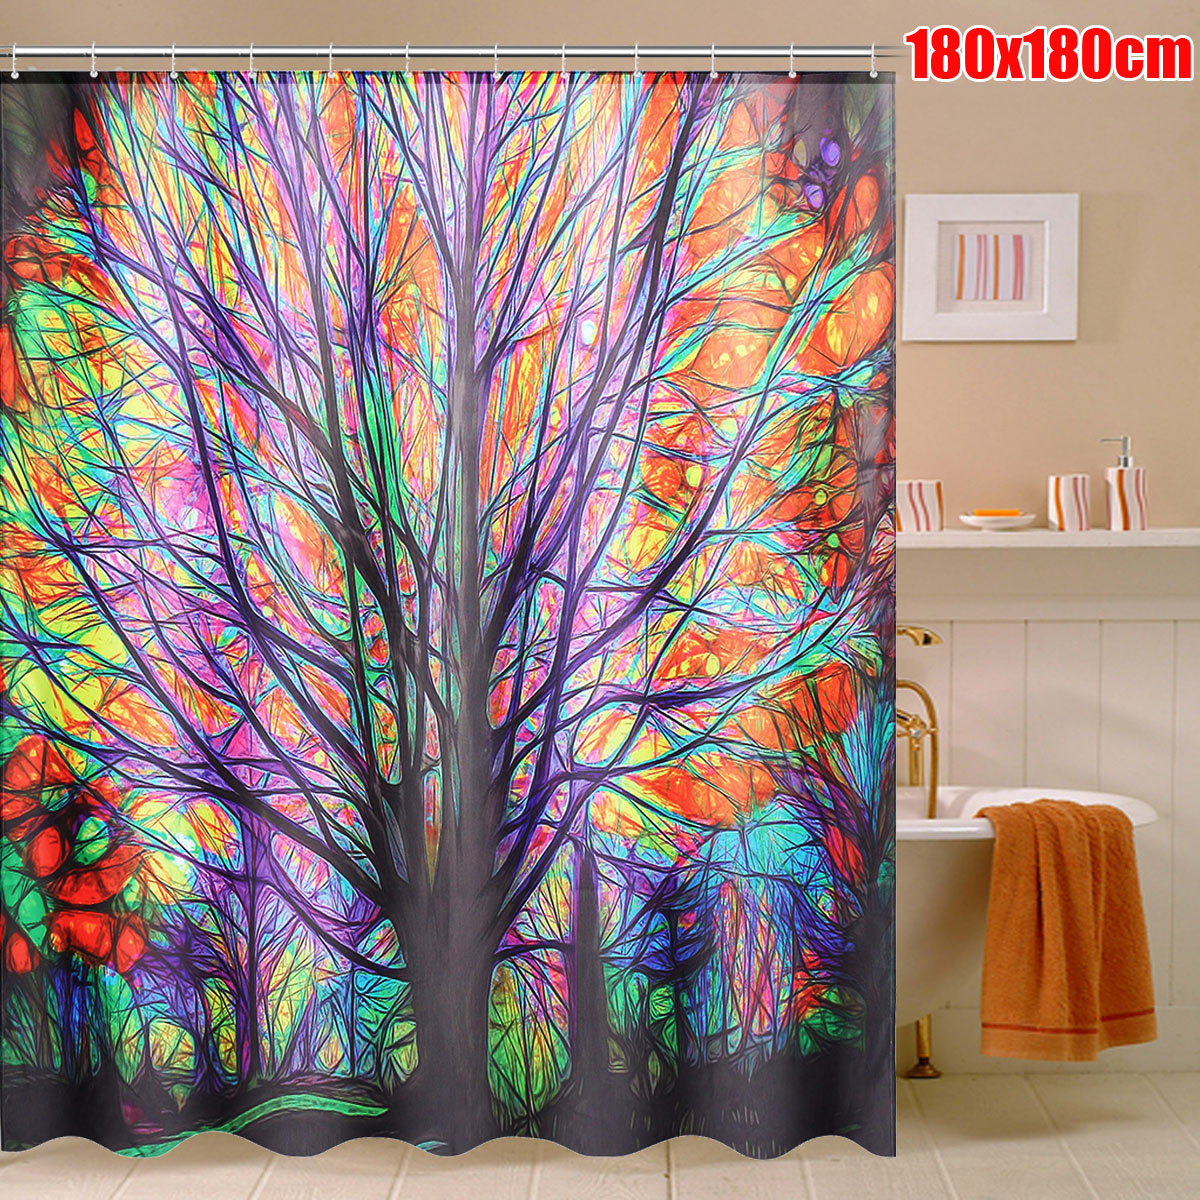 180x180cm-Colorful-Tree-Leaves-Waterproof-Bathroom-Shower-Curtain-w-12-Hooks-1558895-10